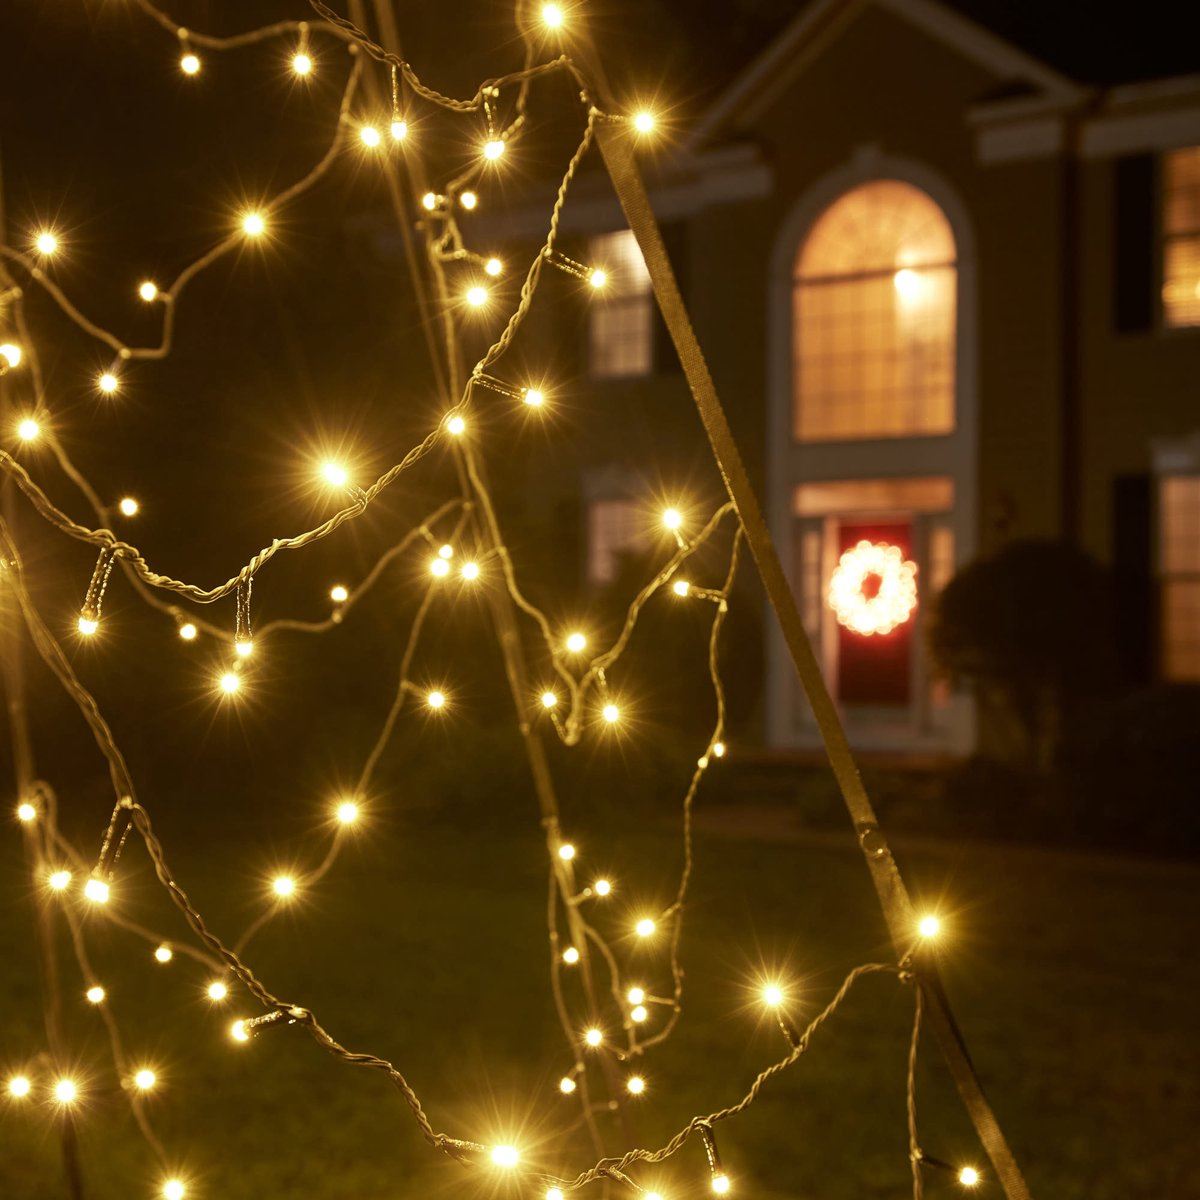 Fairybell flagpole Christmas tree - 600 cm - 1,200 twinkling & warm white LED lights - excluding flagpole